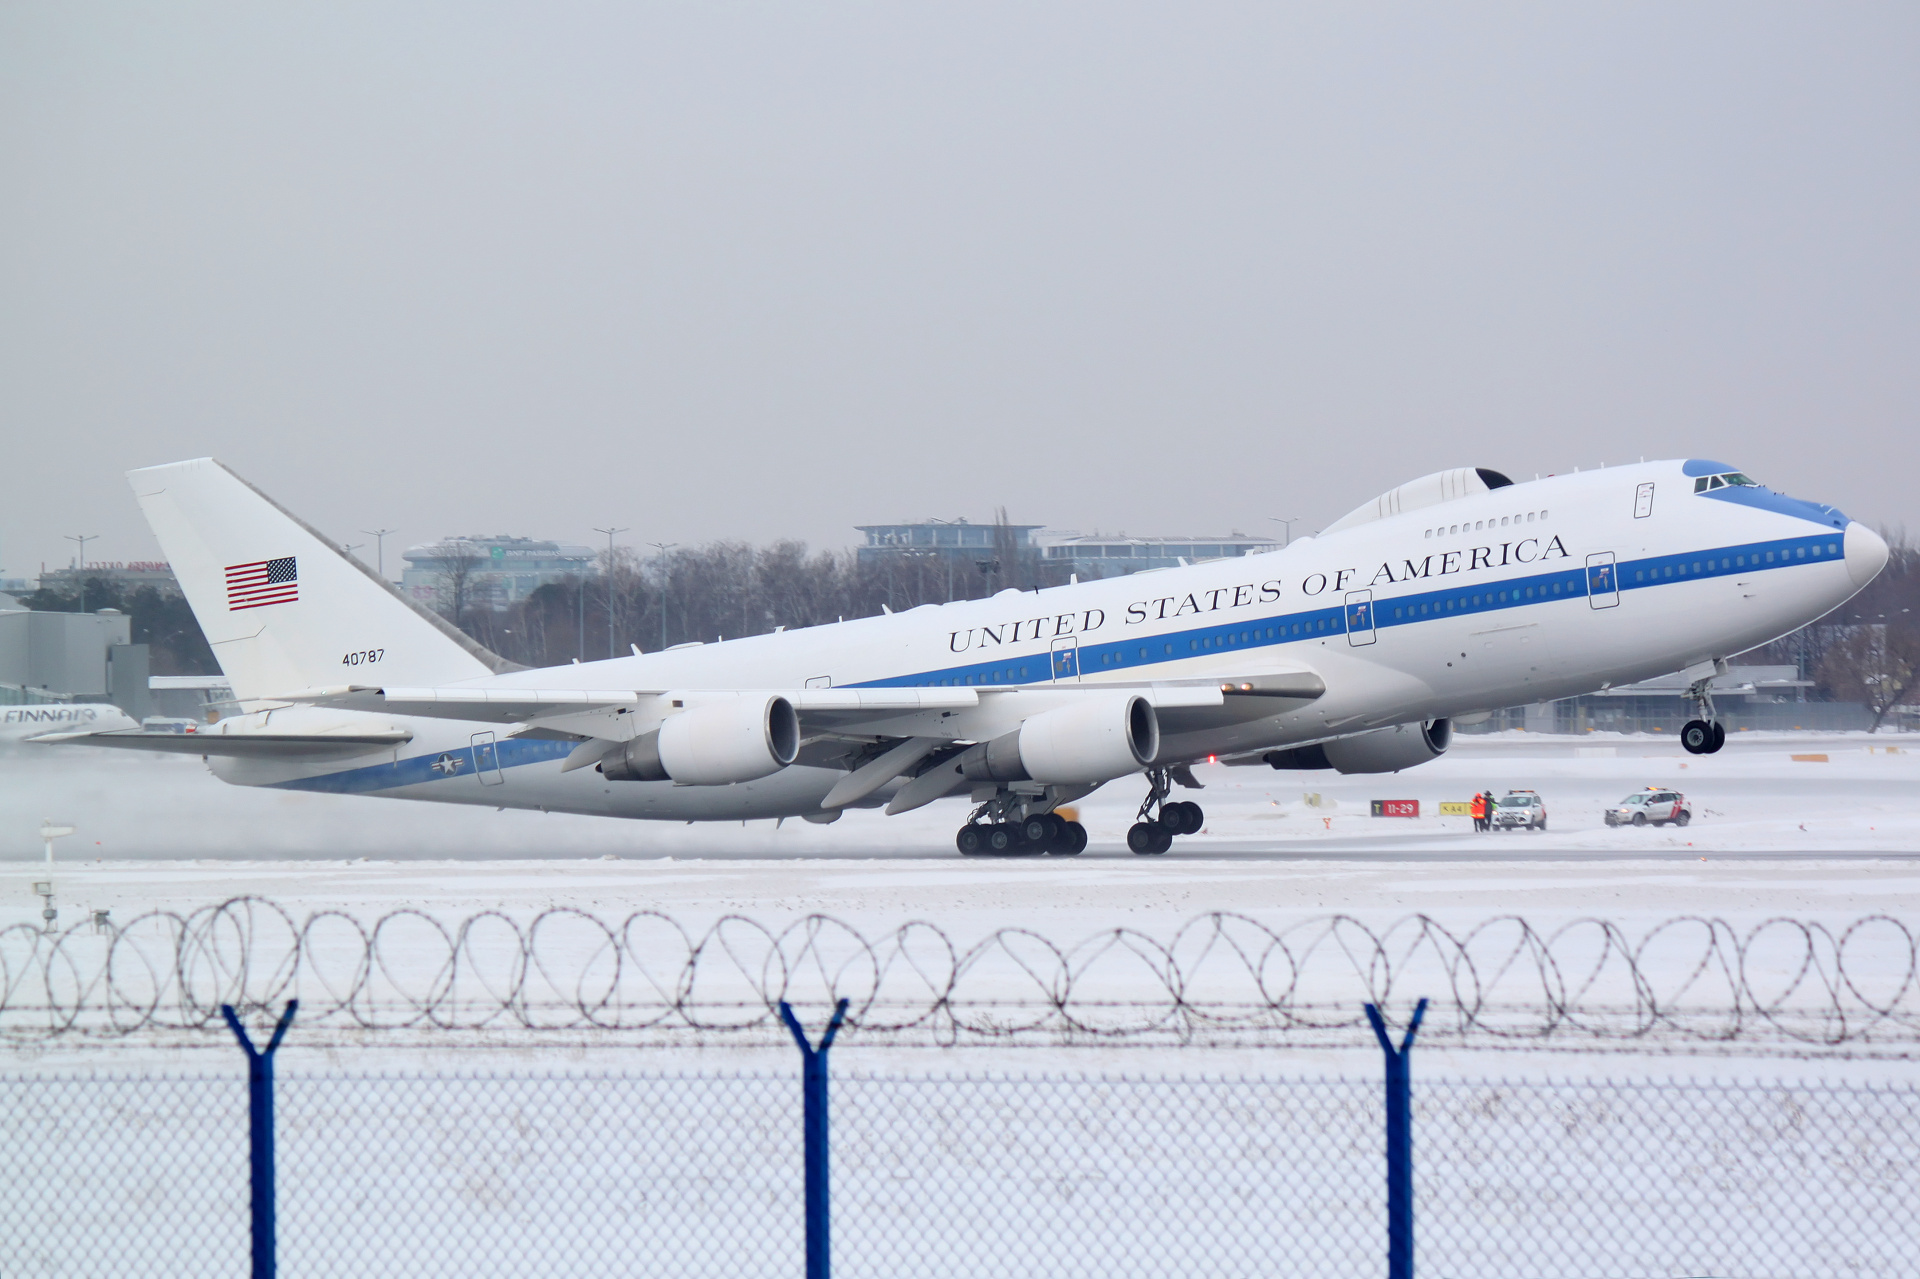 74-0787, U.S. Air Force (Aircraft » EPWA Spotting » Boeing 747-200 » E-4B)